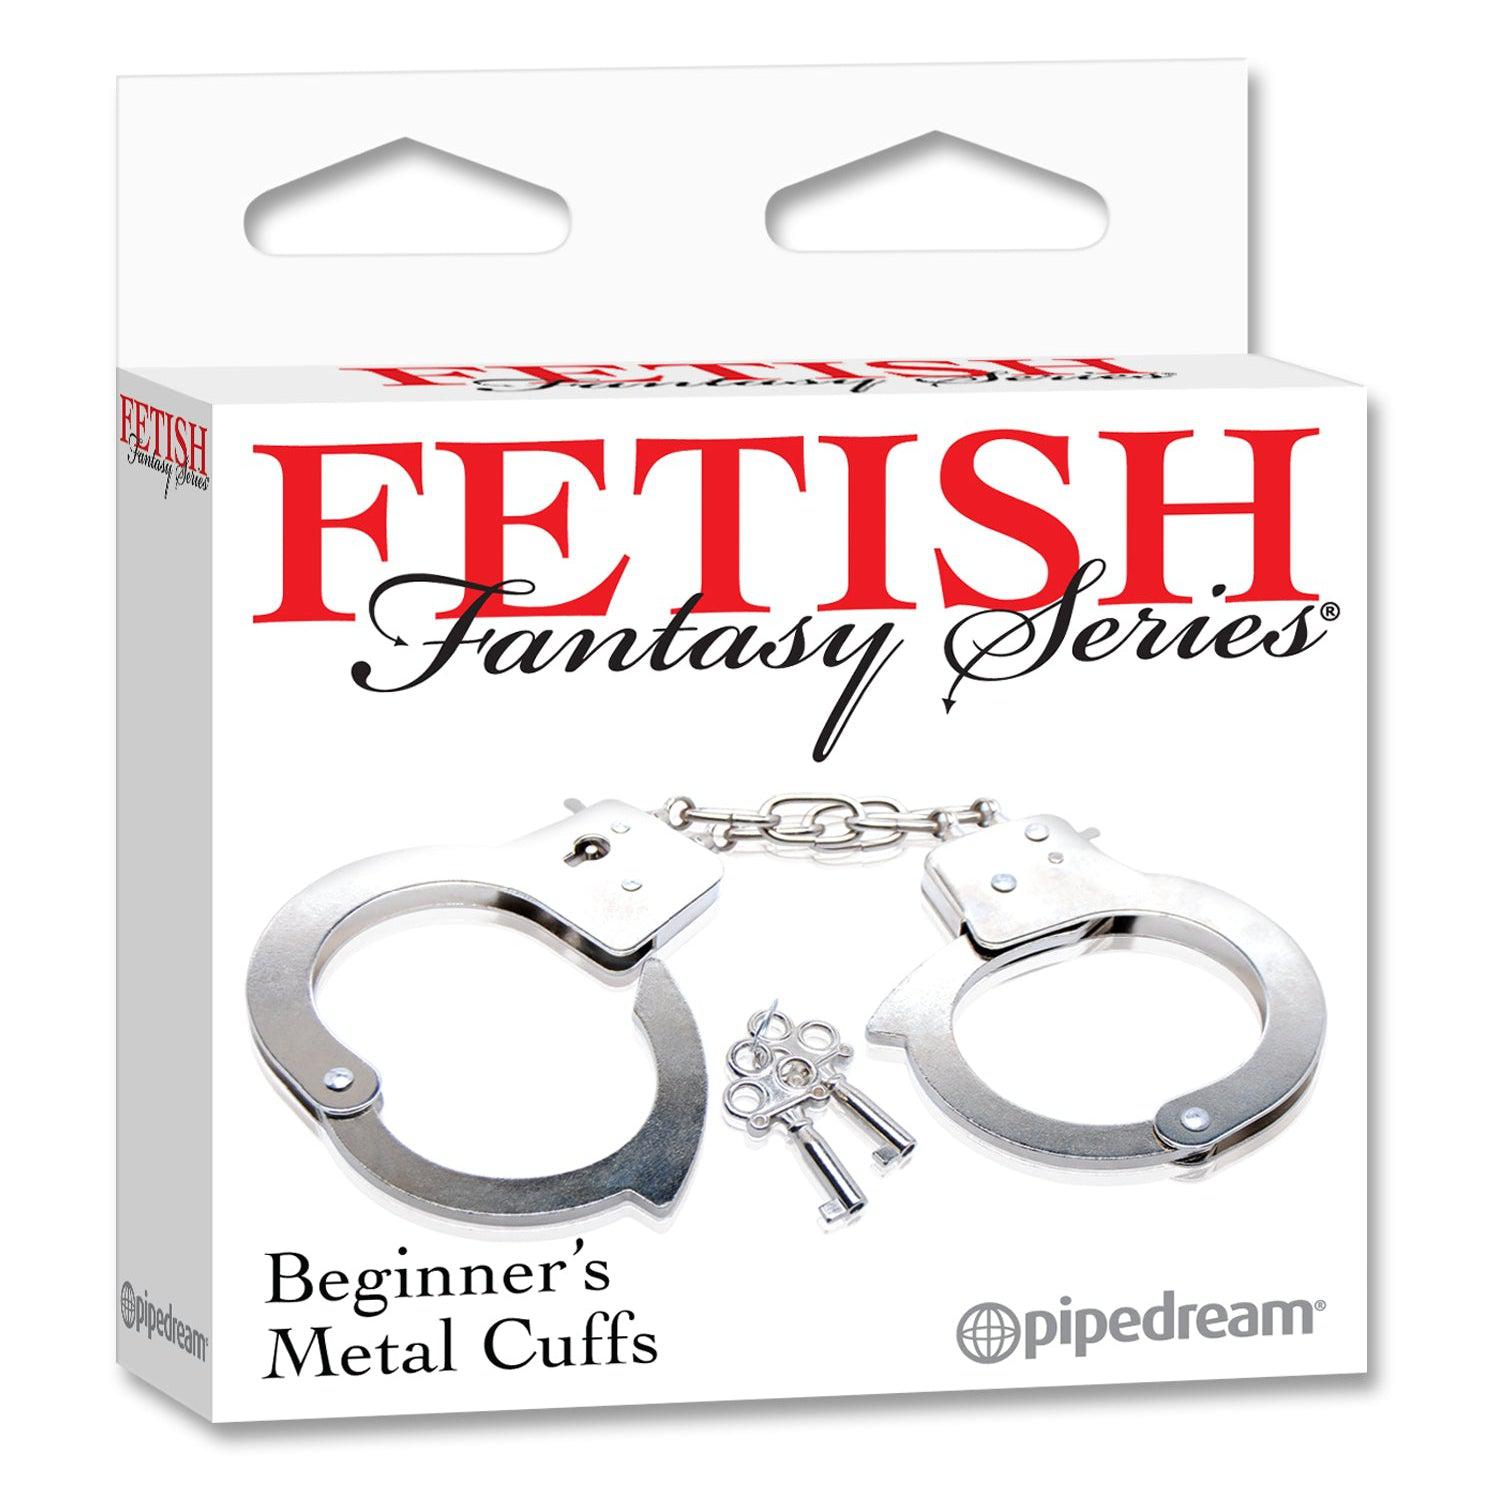 Fetish Fantasy Series Beginner's Metal Cuffs